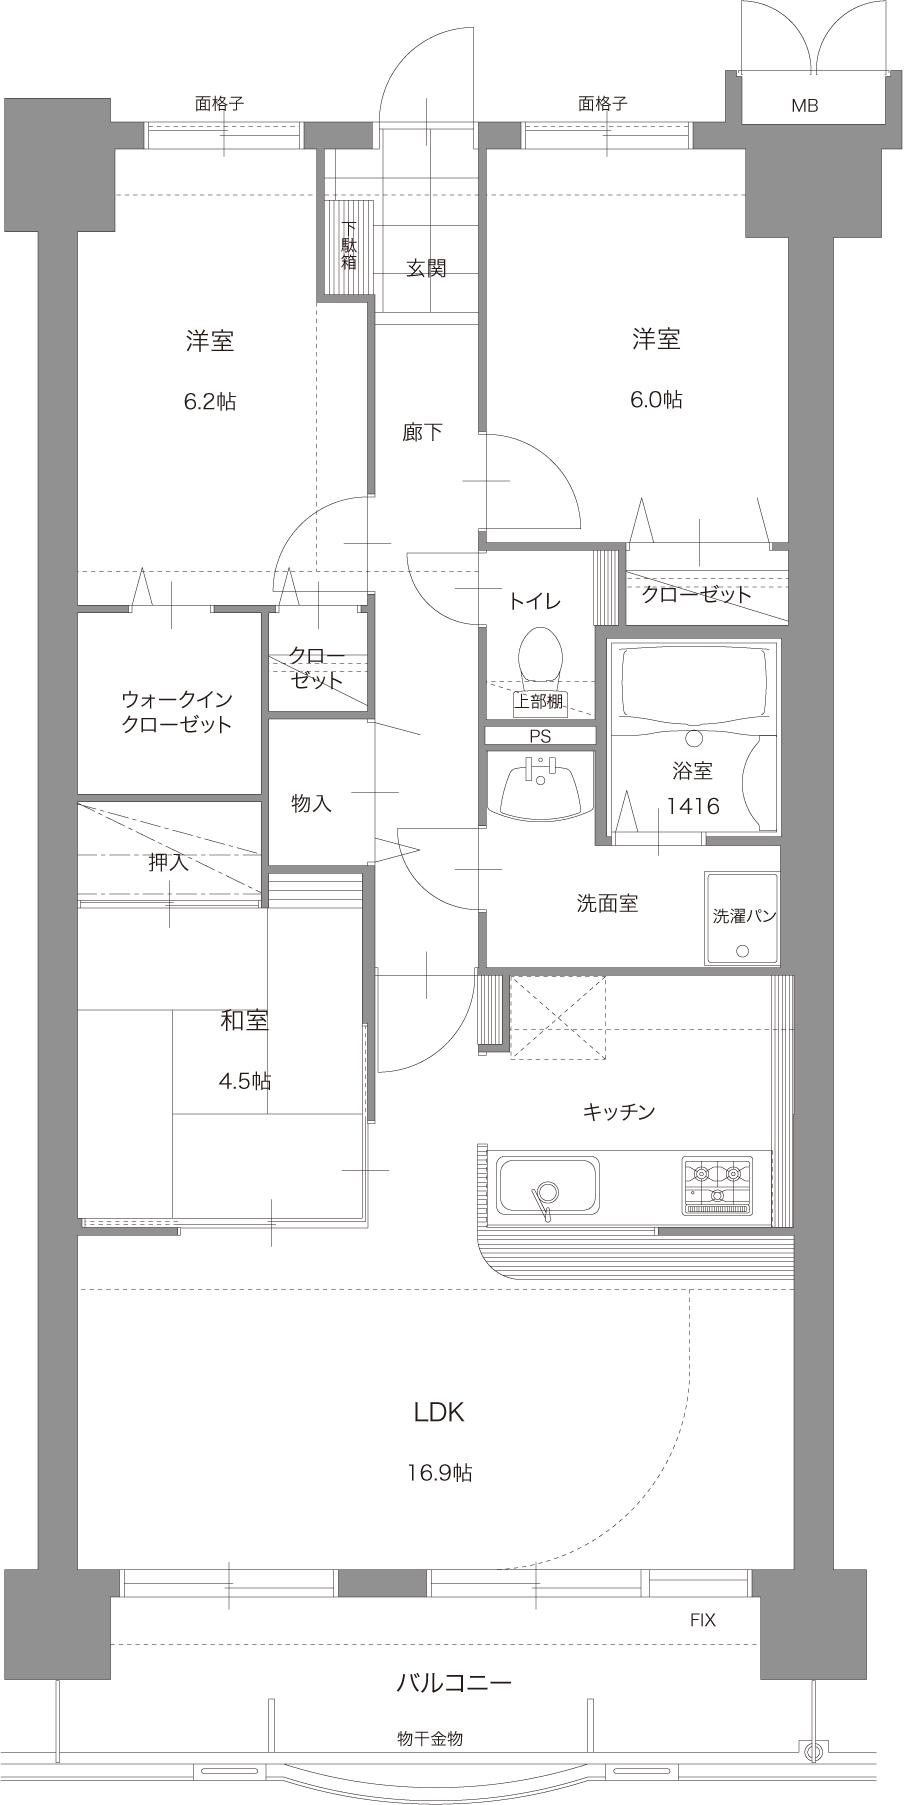 Floor plan. 3LDK, Price 15.9 million yen, Occupied area 78.72 sq m , Balcony area 10.38 sq m D type